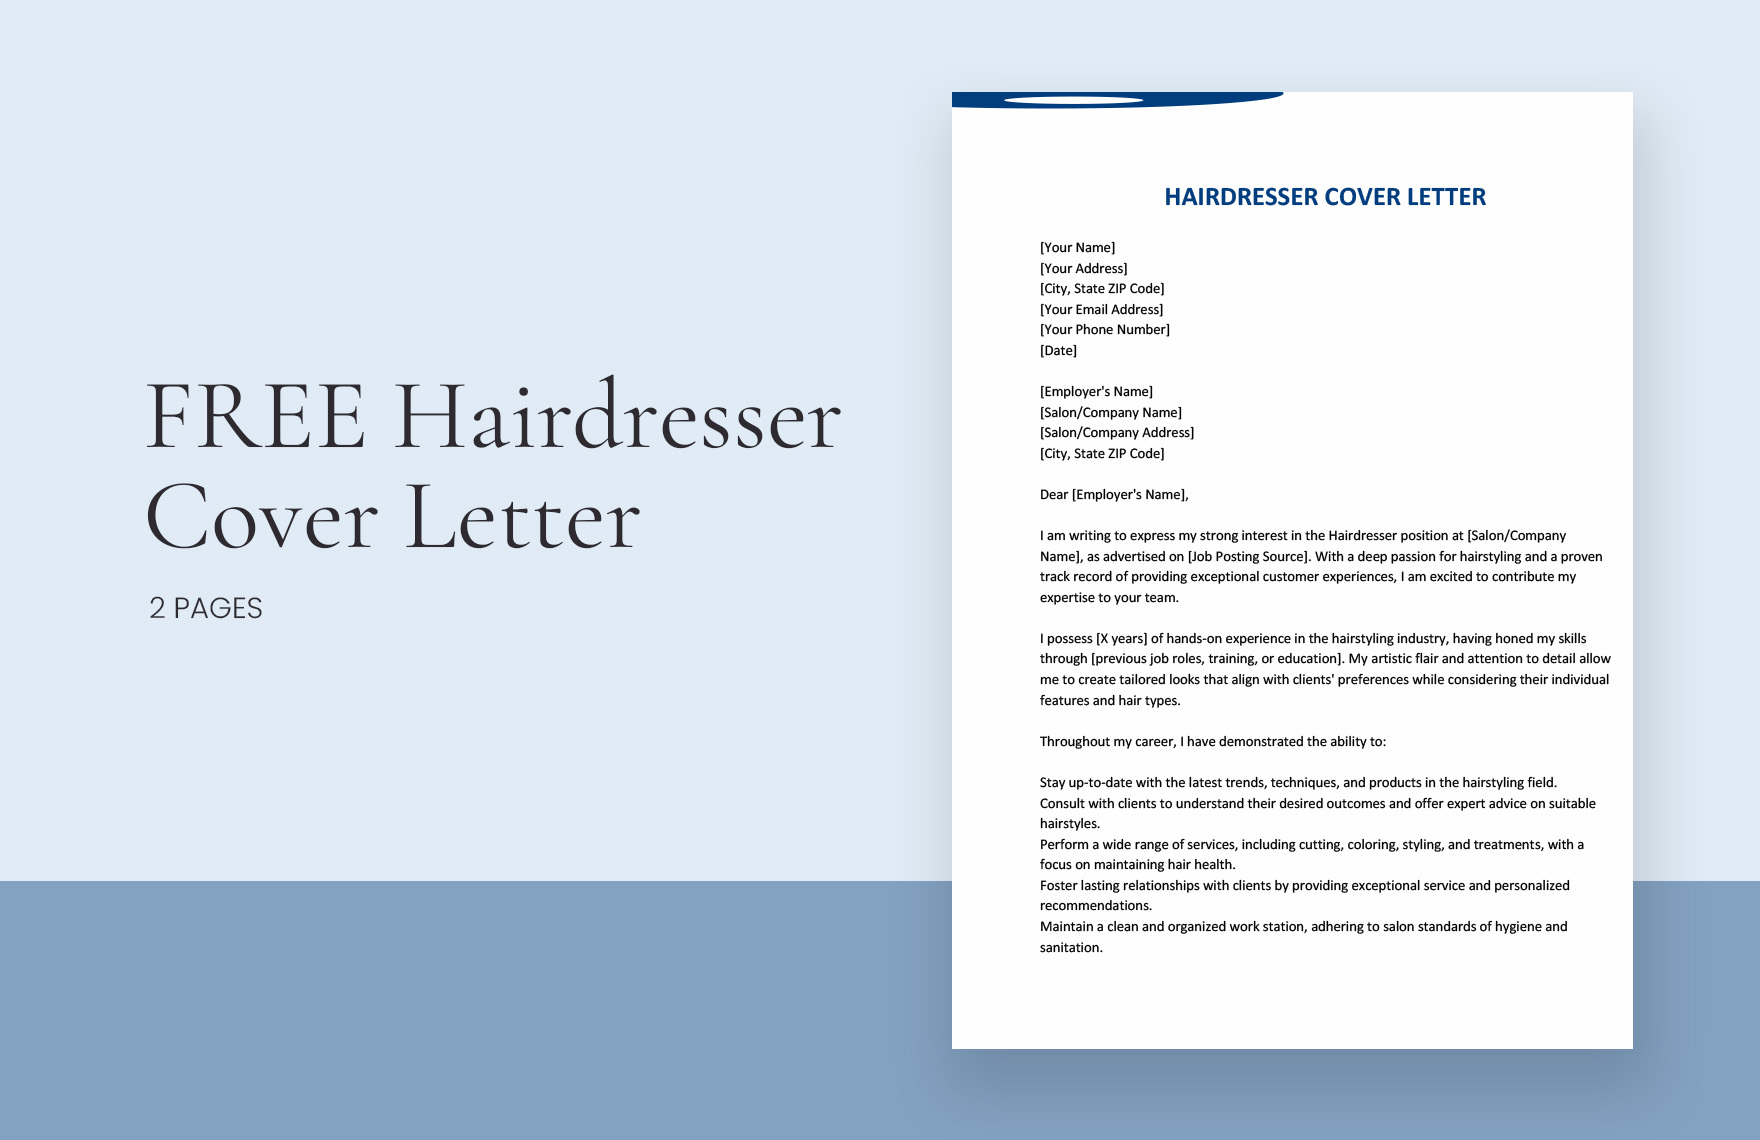 Hairdresser Cover Letter in Word, Google Docs